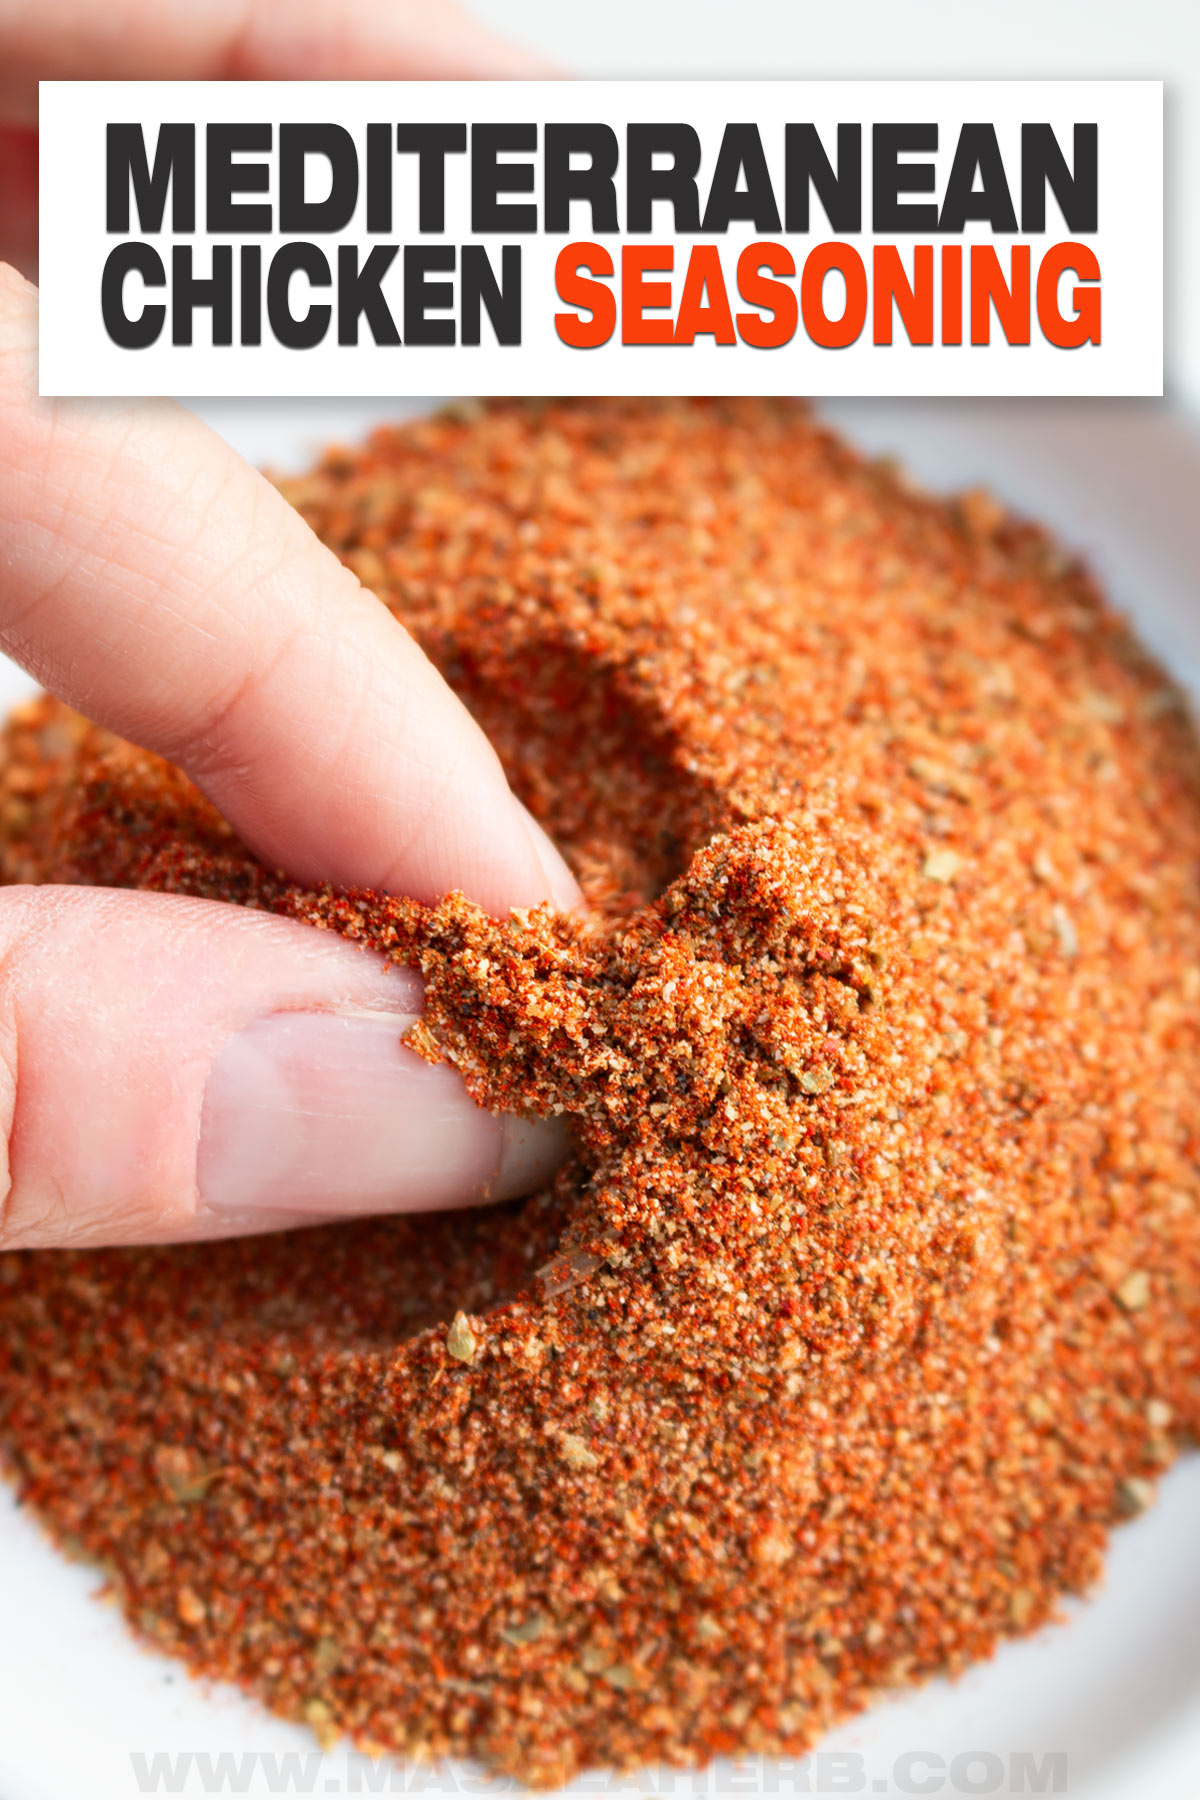 Mediterranean Chicken Seasoning cover image